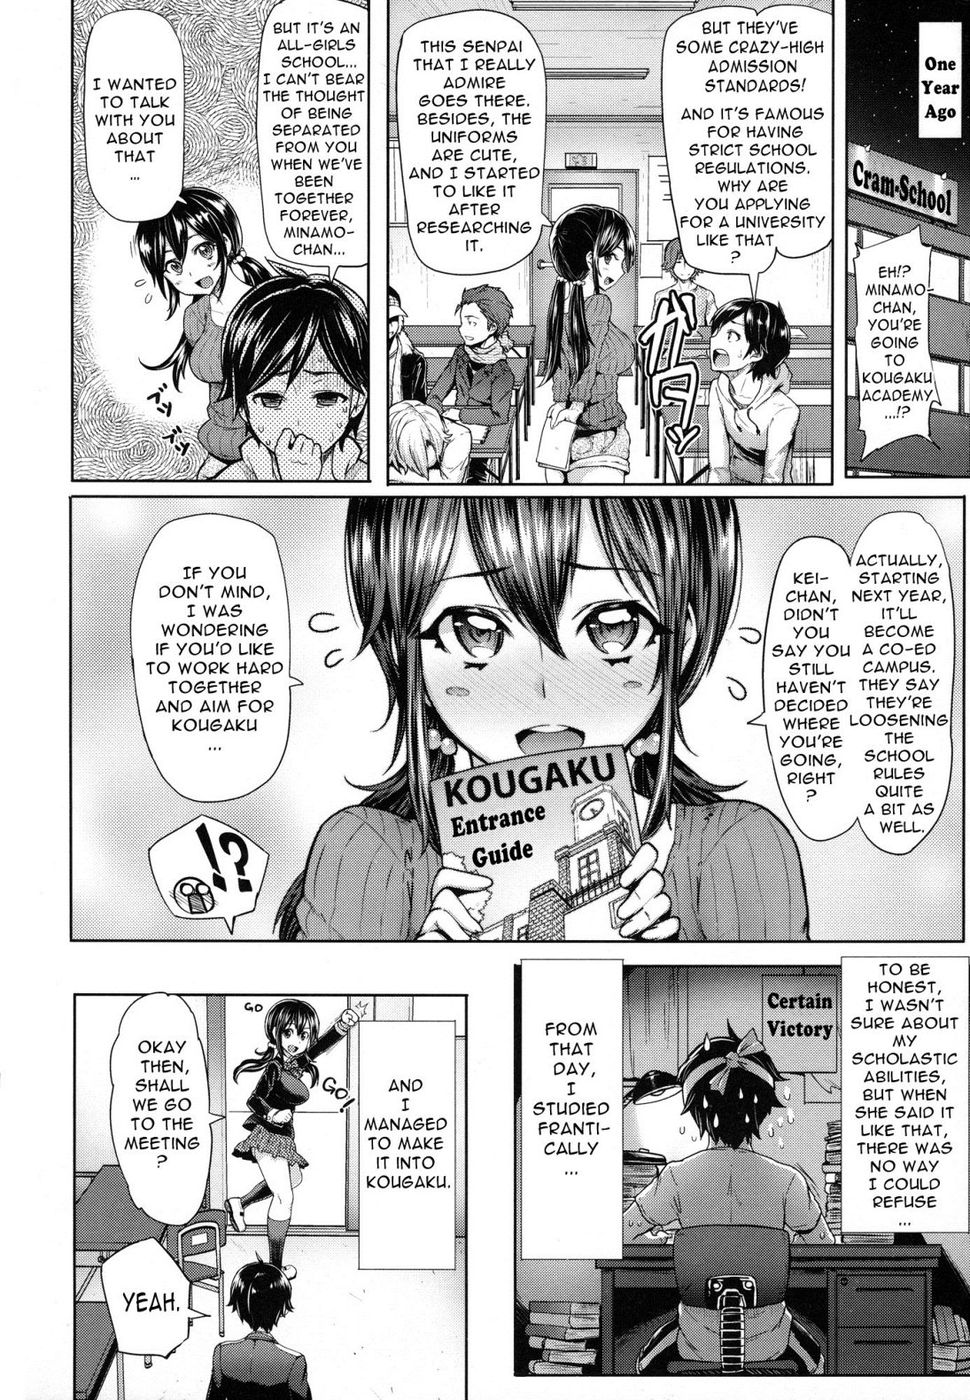 Hentai Manga Comic-Limit Break 3-Chapter 2-Corruption Of Morals Vol1-2